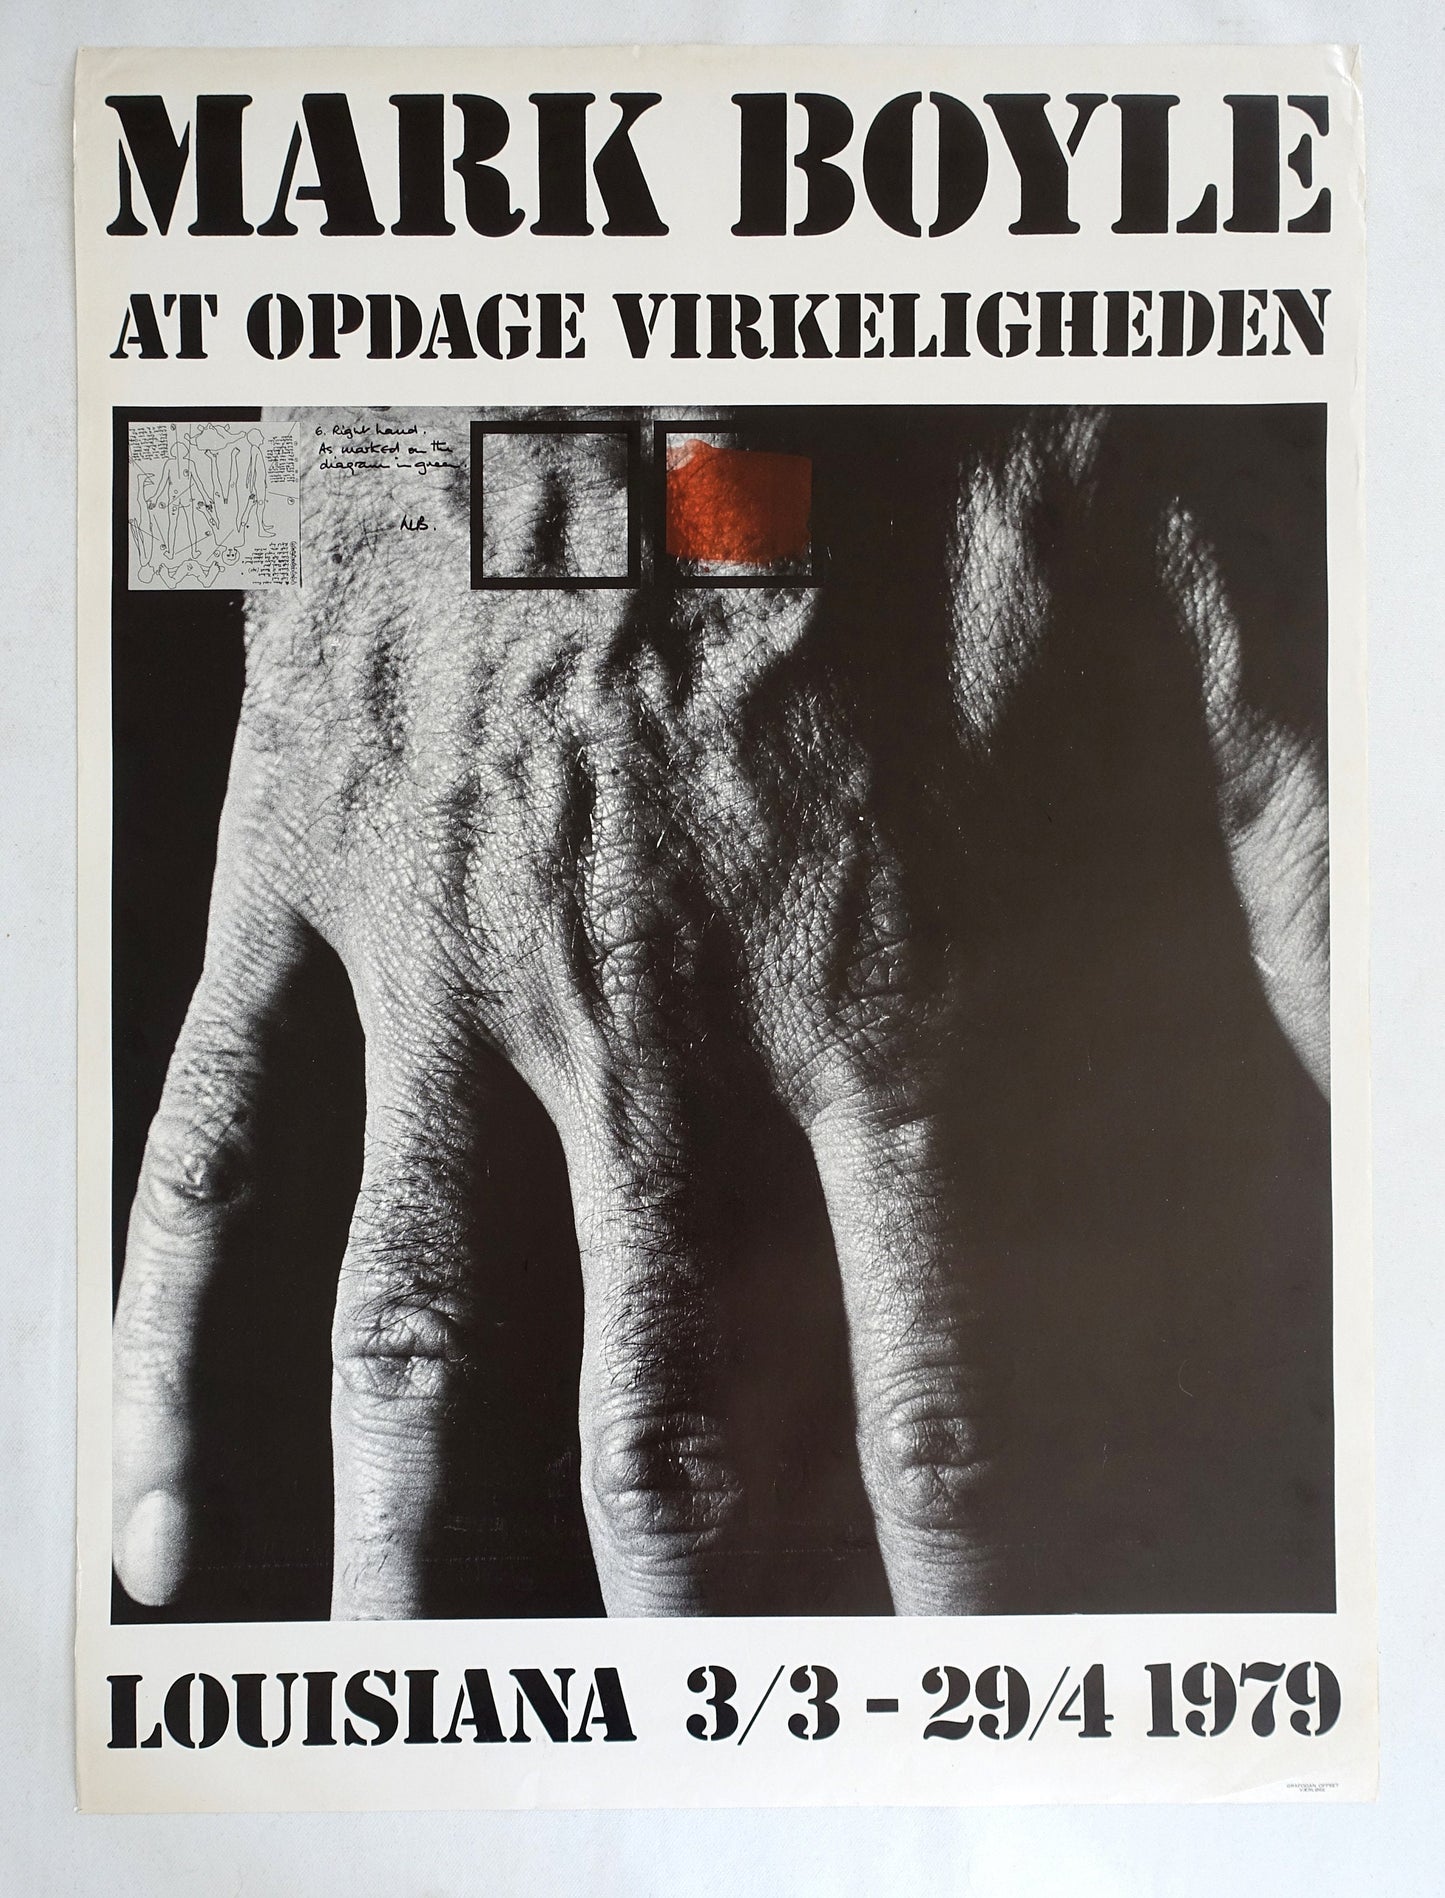 1979 Mark Boyle Exhibition on Louisiana Museum, Denmark - Original Vintage Poster